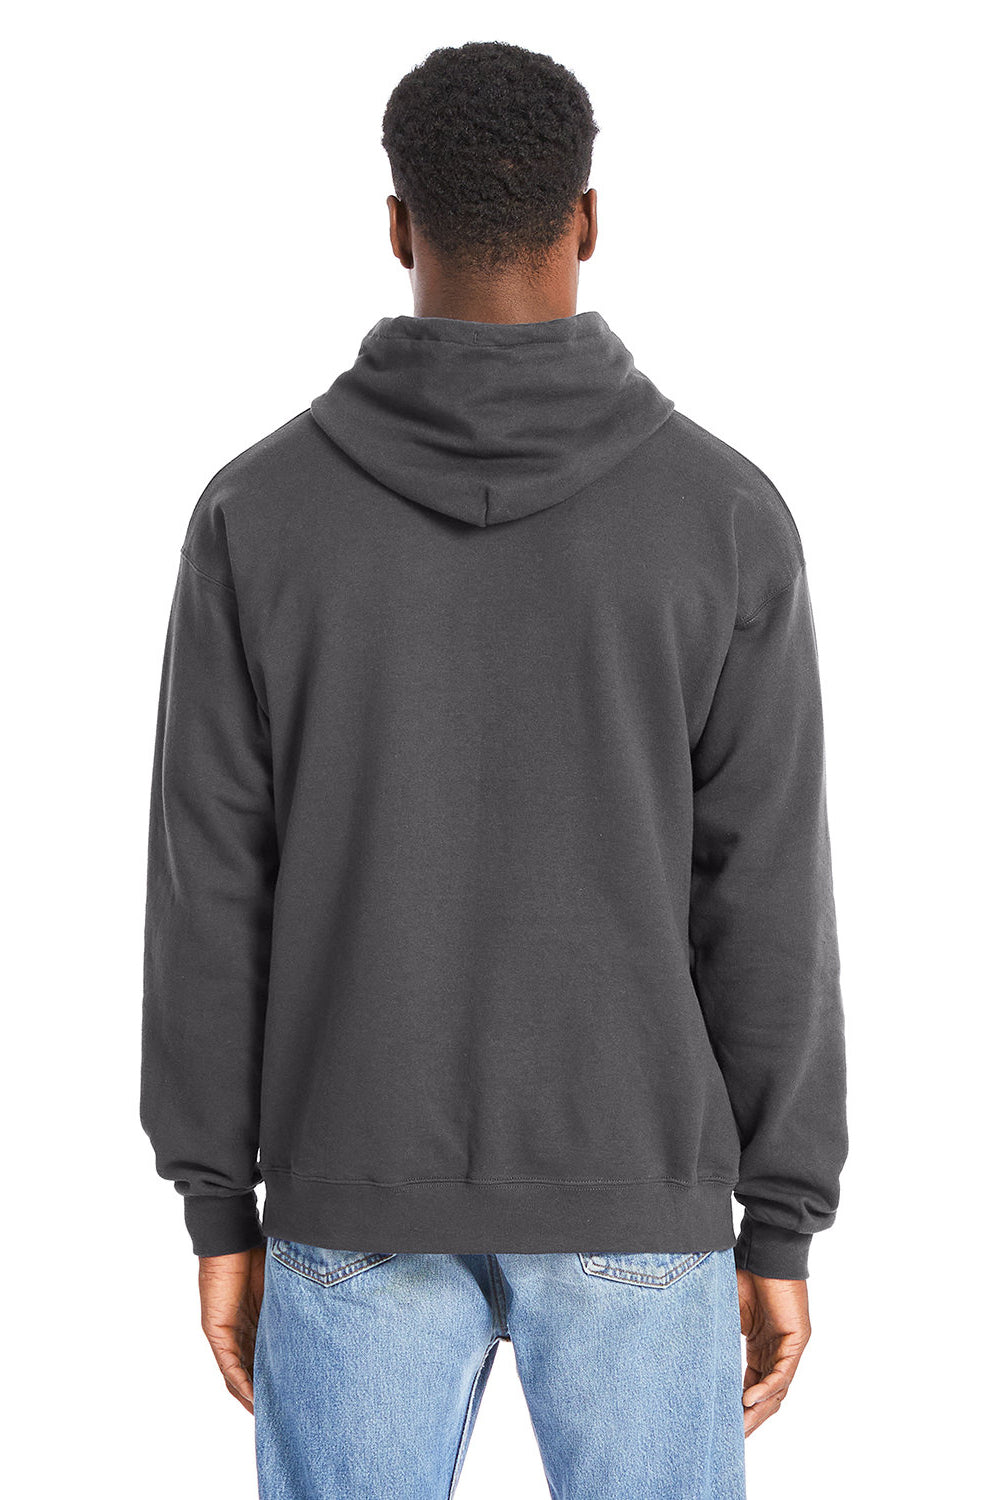 Hanes RS170 Mens Perfect Sweats Hooded Sweatshirt Hoodie Smoke Grey 3Q